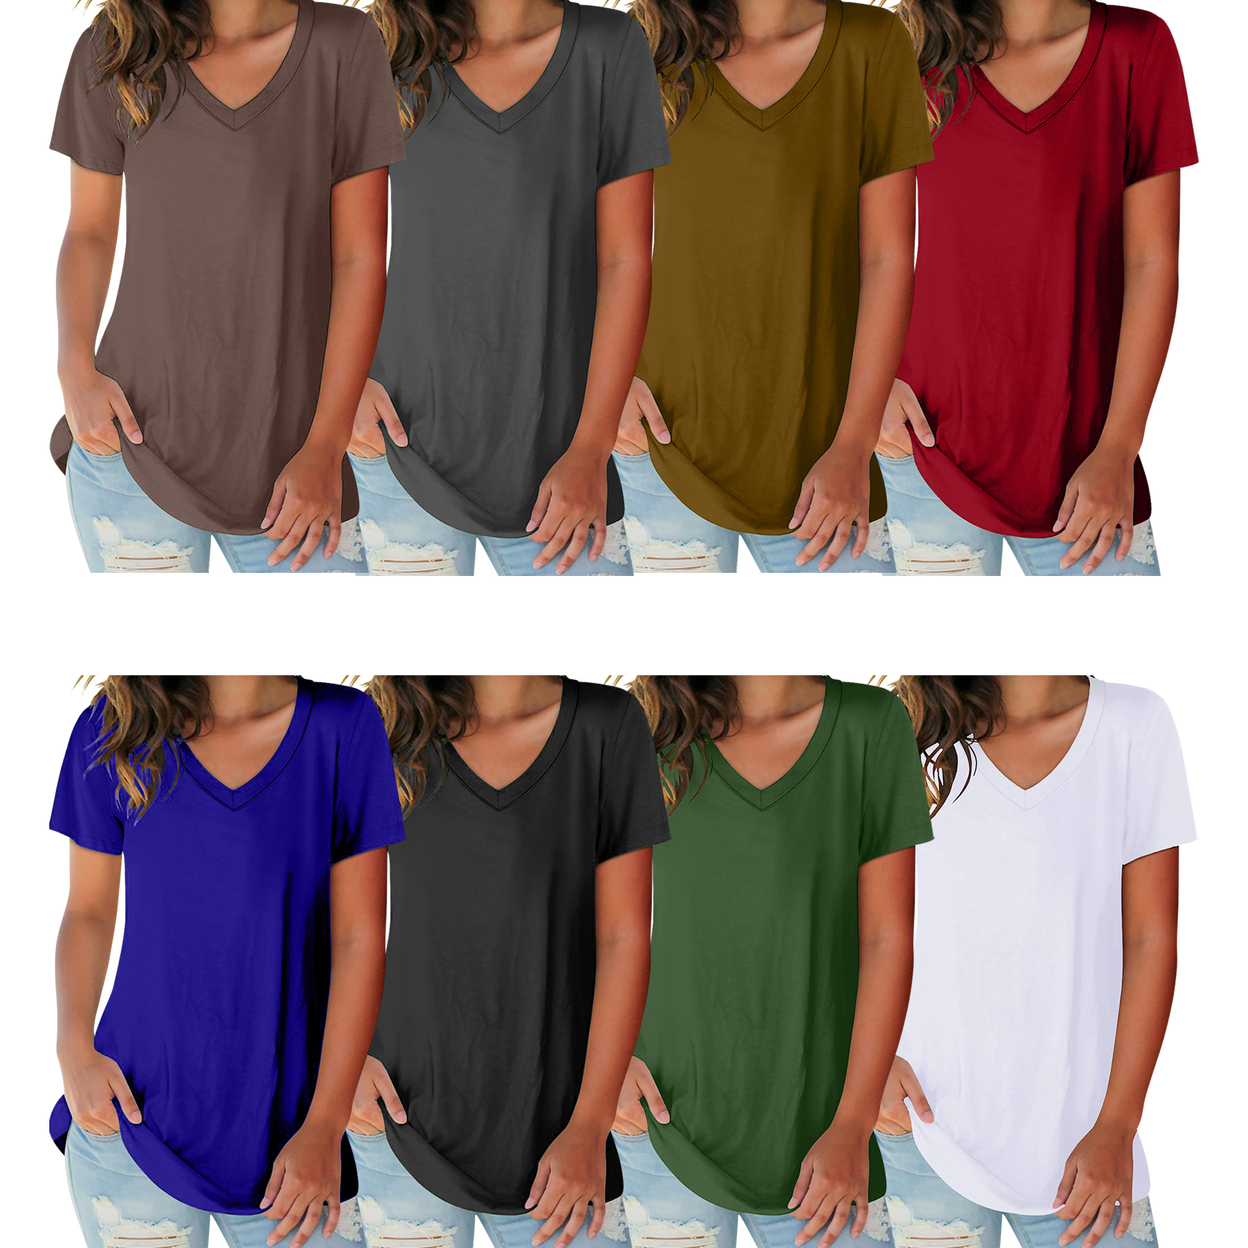 3-Pack: Women's Ultra Soft Smooth Cotton Blend Basic V-Neck Short Sleeve Shirts - Black, Navy, Green, Medium